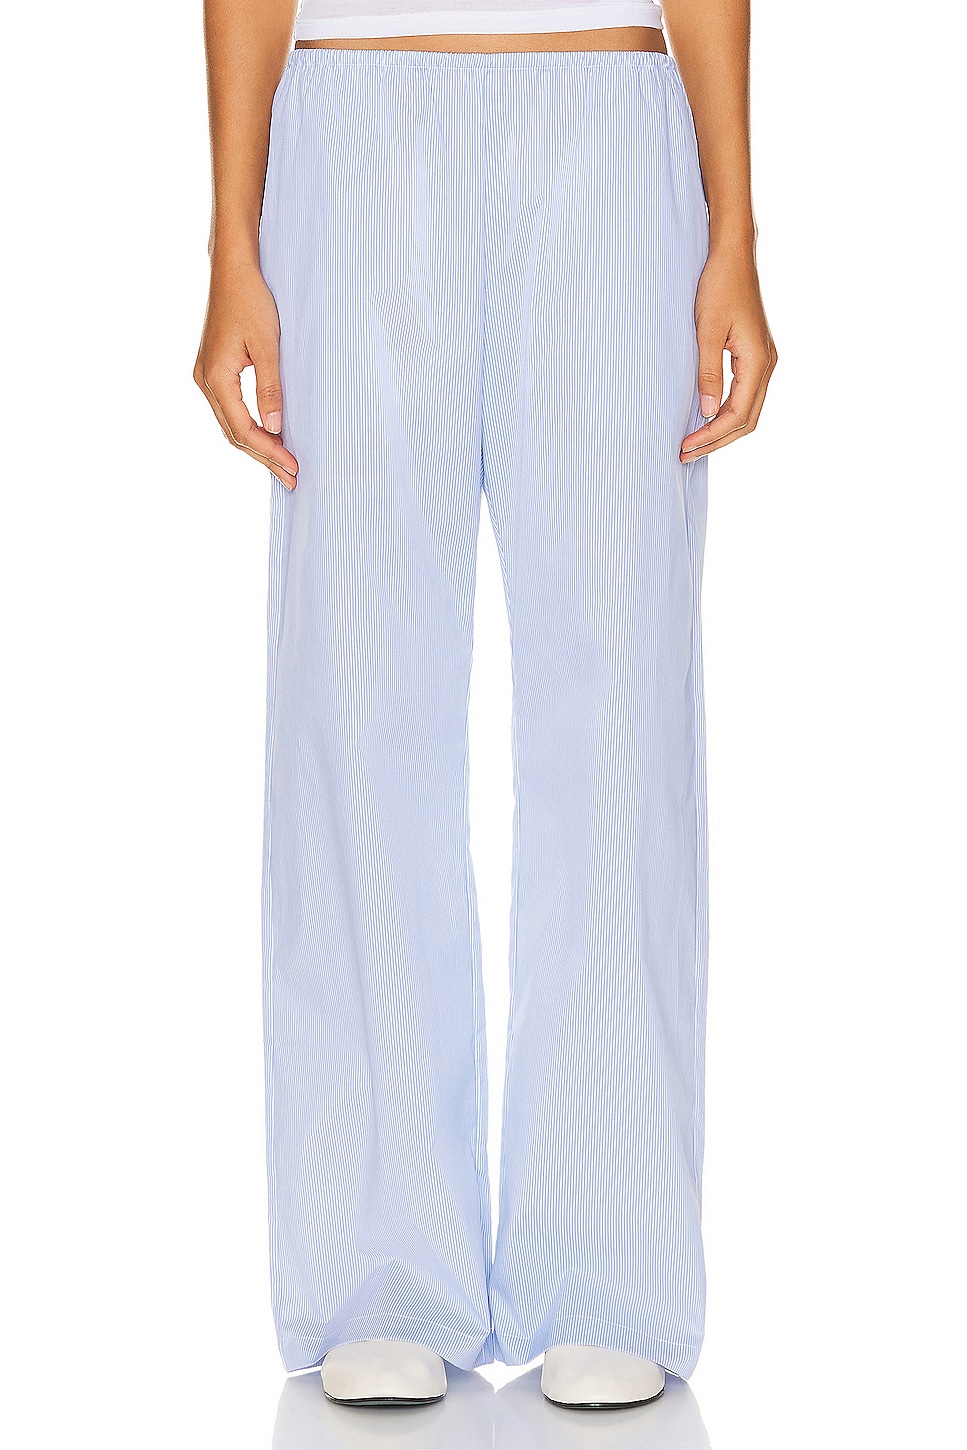 Image 1 of LESET Yoshi Pocket Pant in Blue & White Stripe